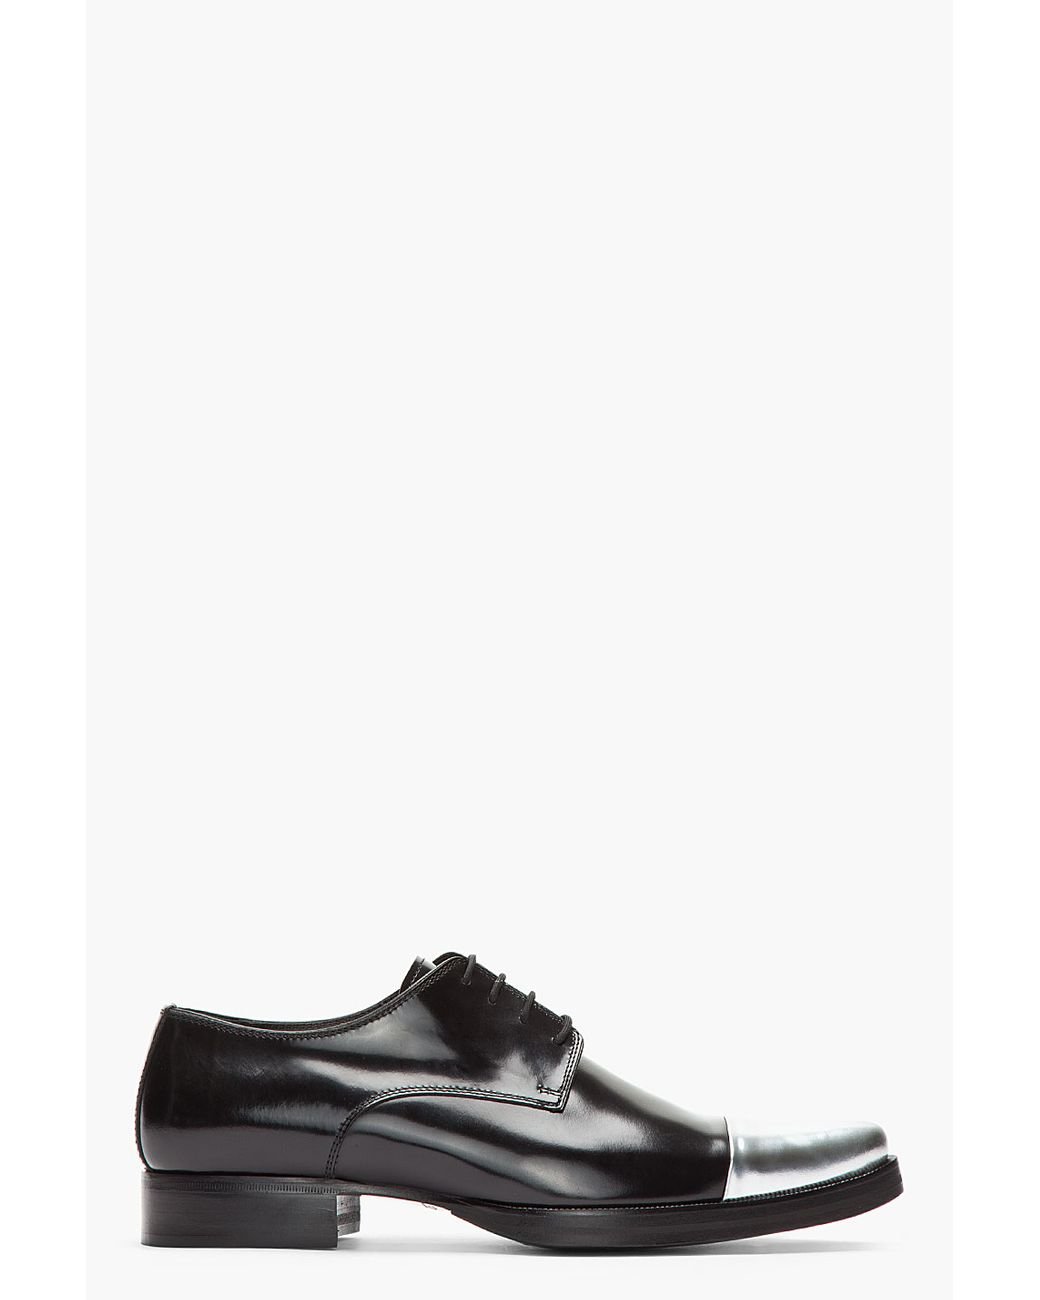 DSquared² Black Silver Cap Toe Derby Leather Dress Shoes for Men | Lyst